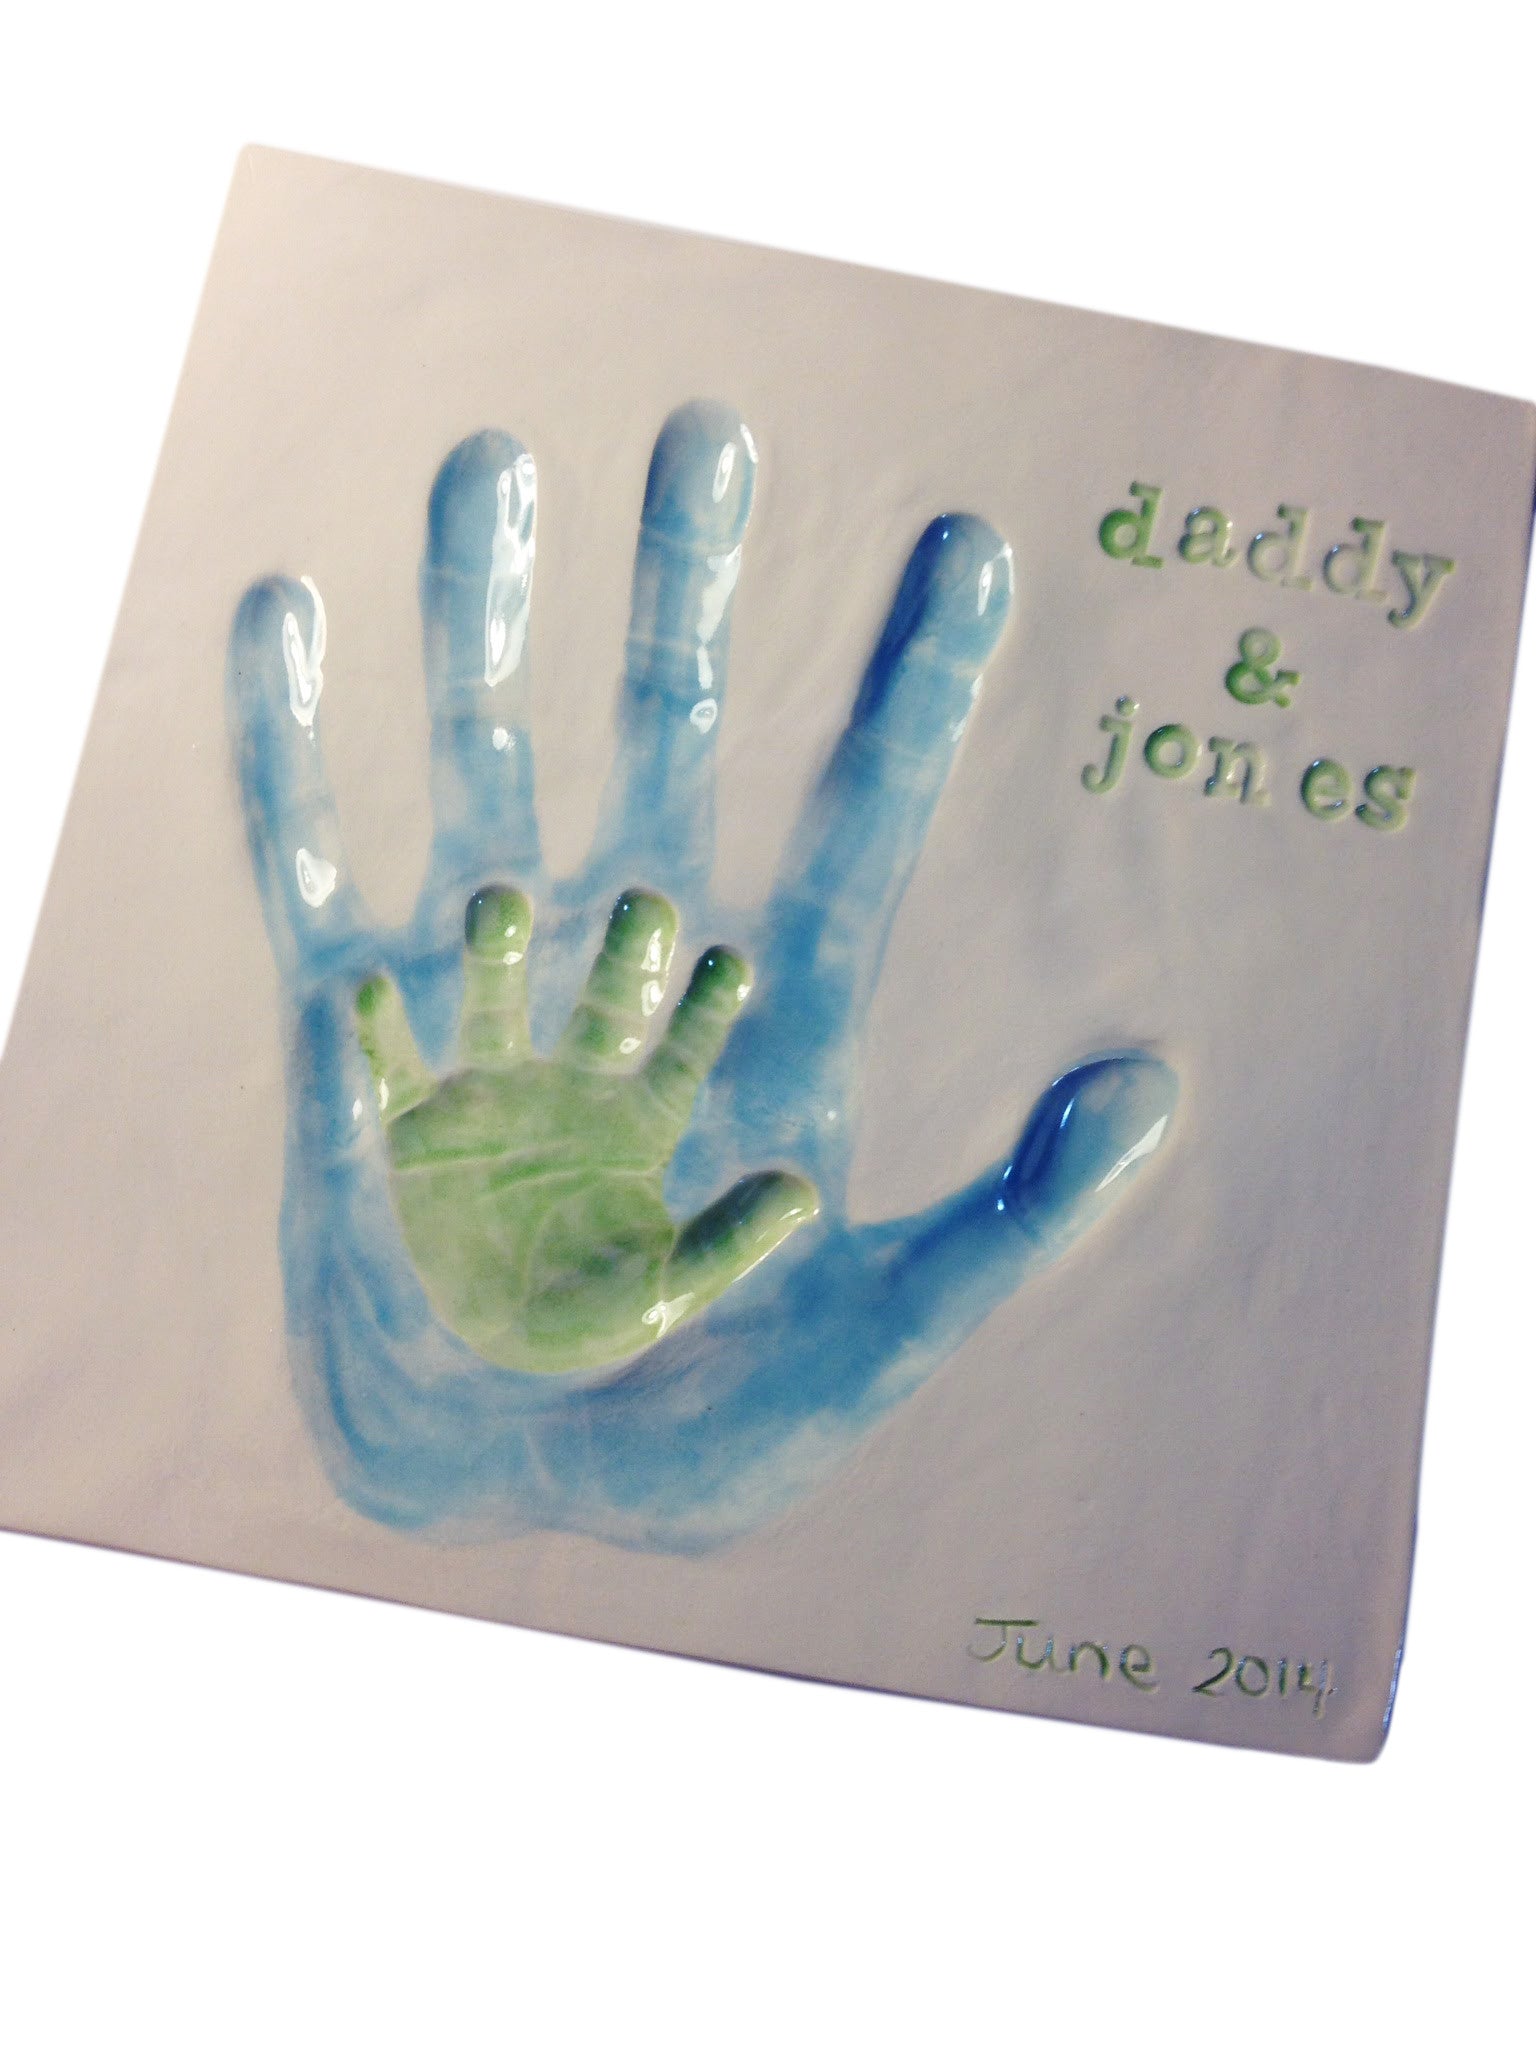 Toddler Handprint Personalized Baby Handprint Mold Custom Baby